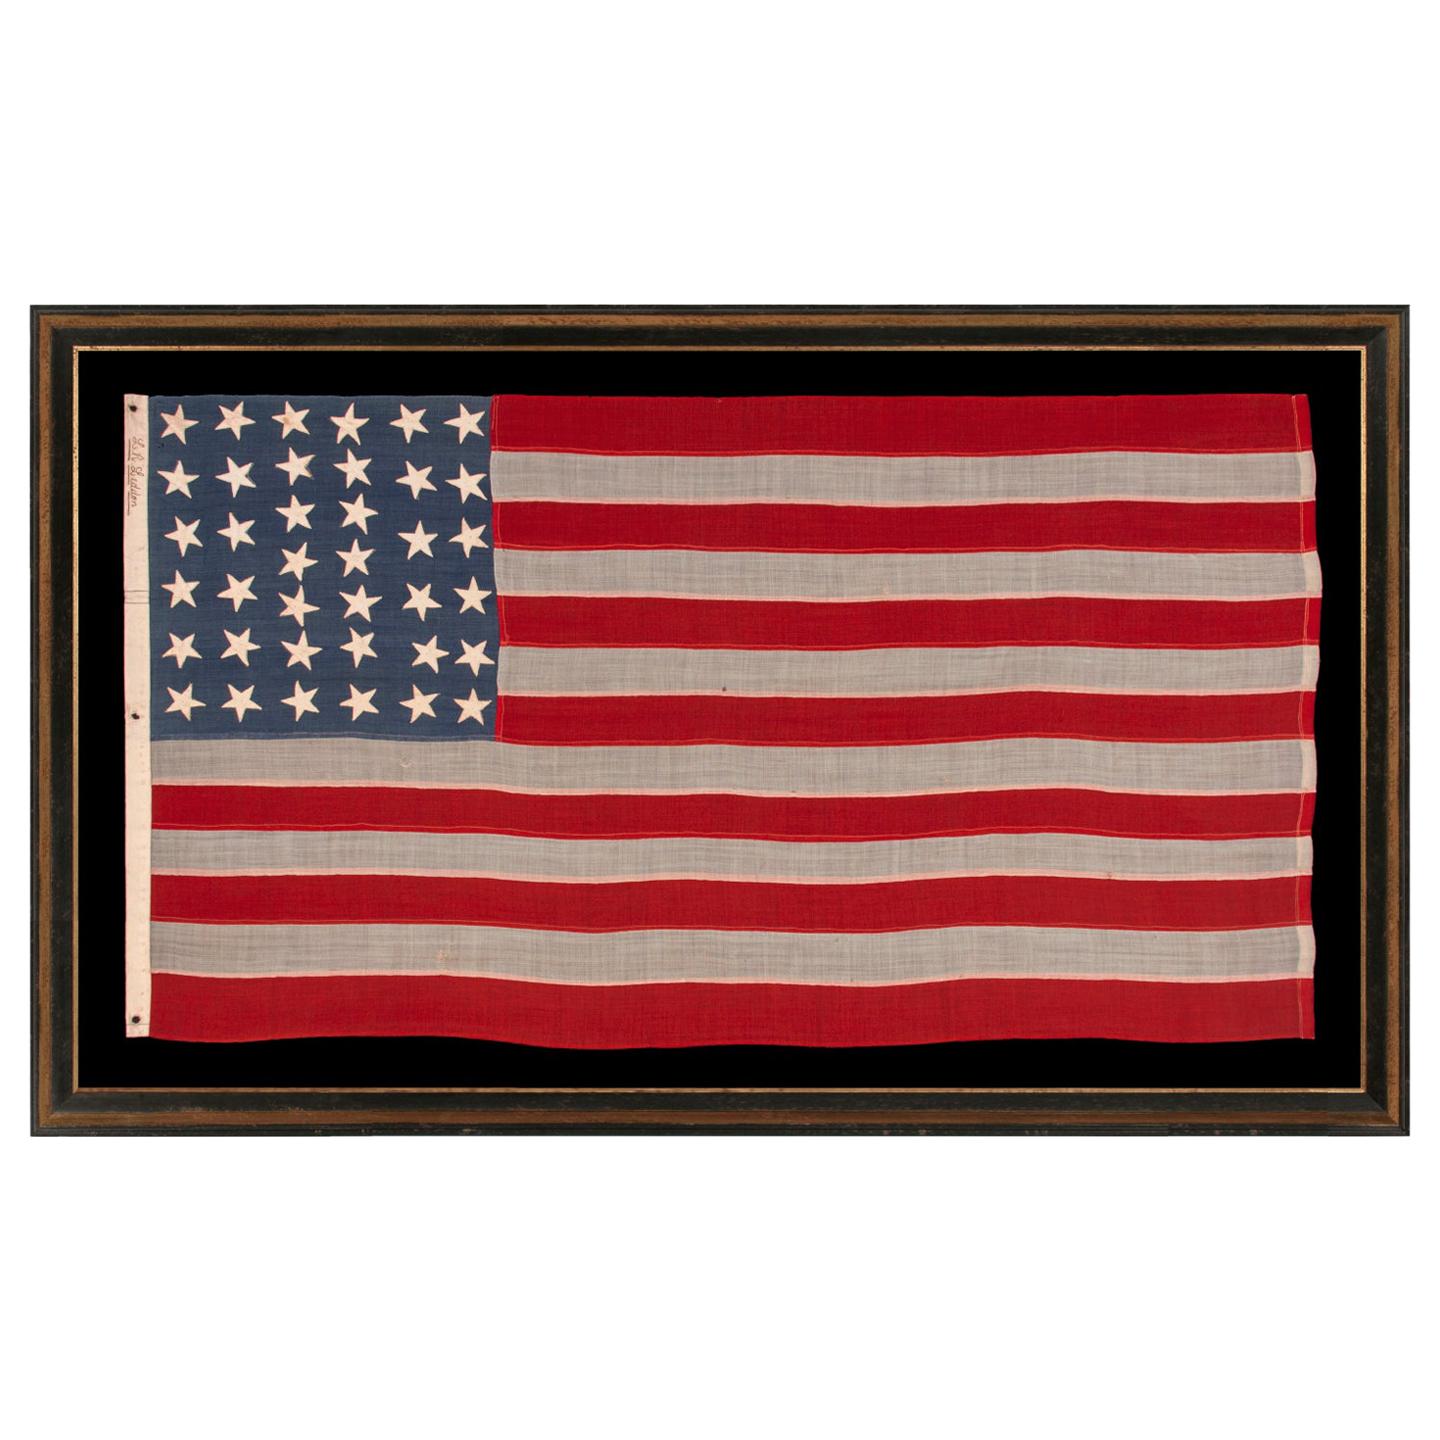 38 Star American Flag with Slate Blue Canton Signed "Leddon"